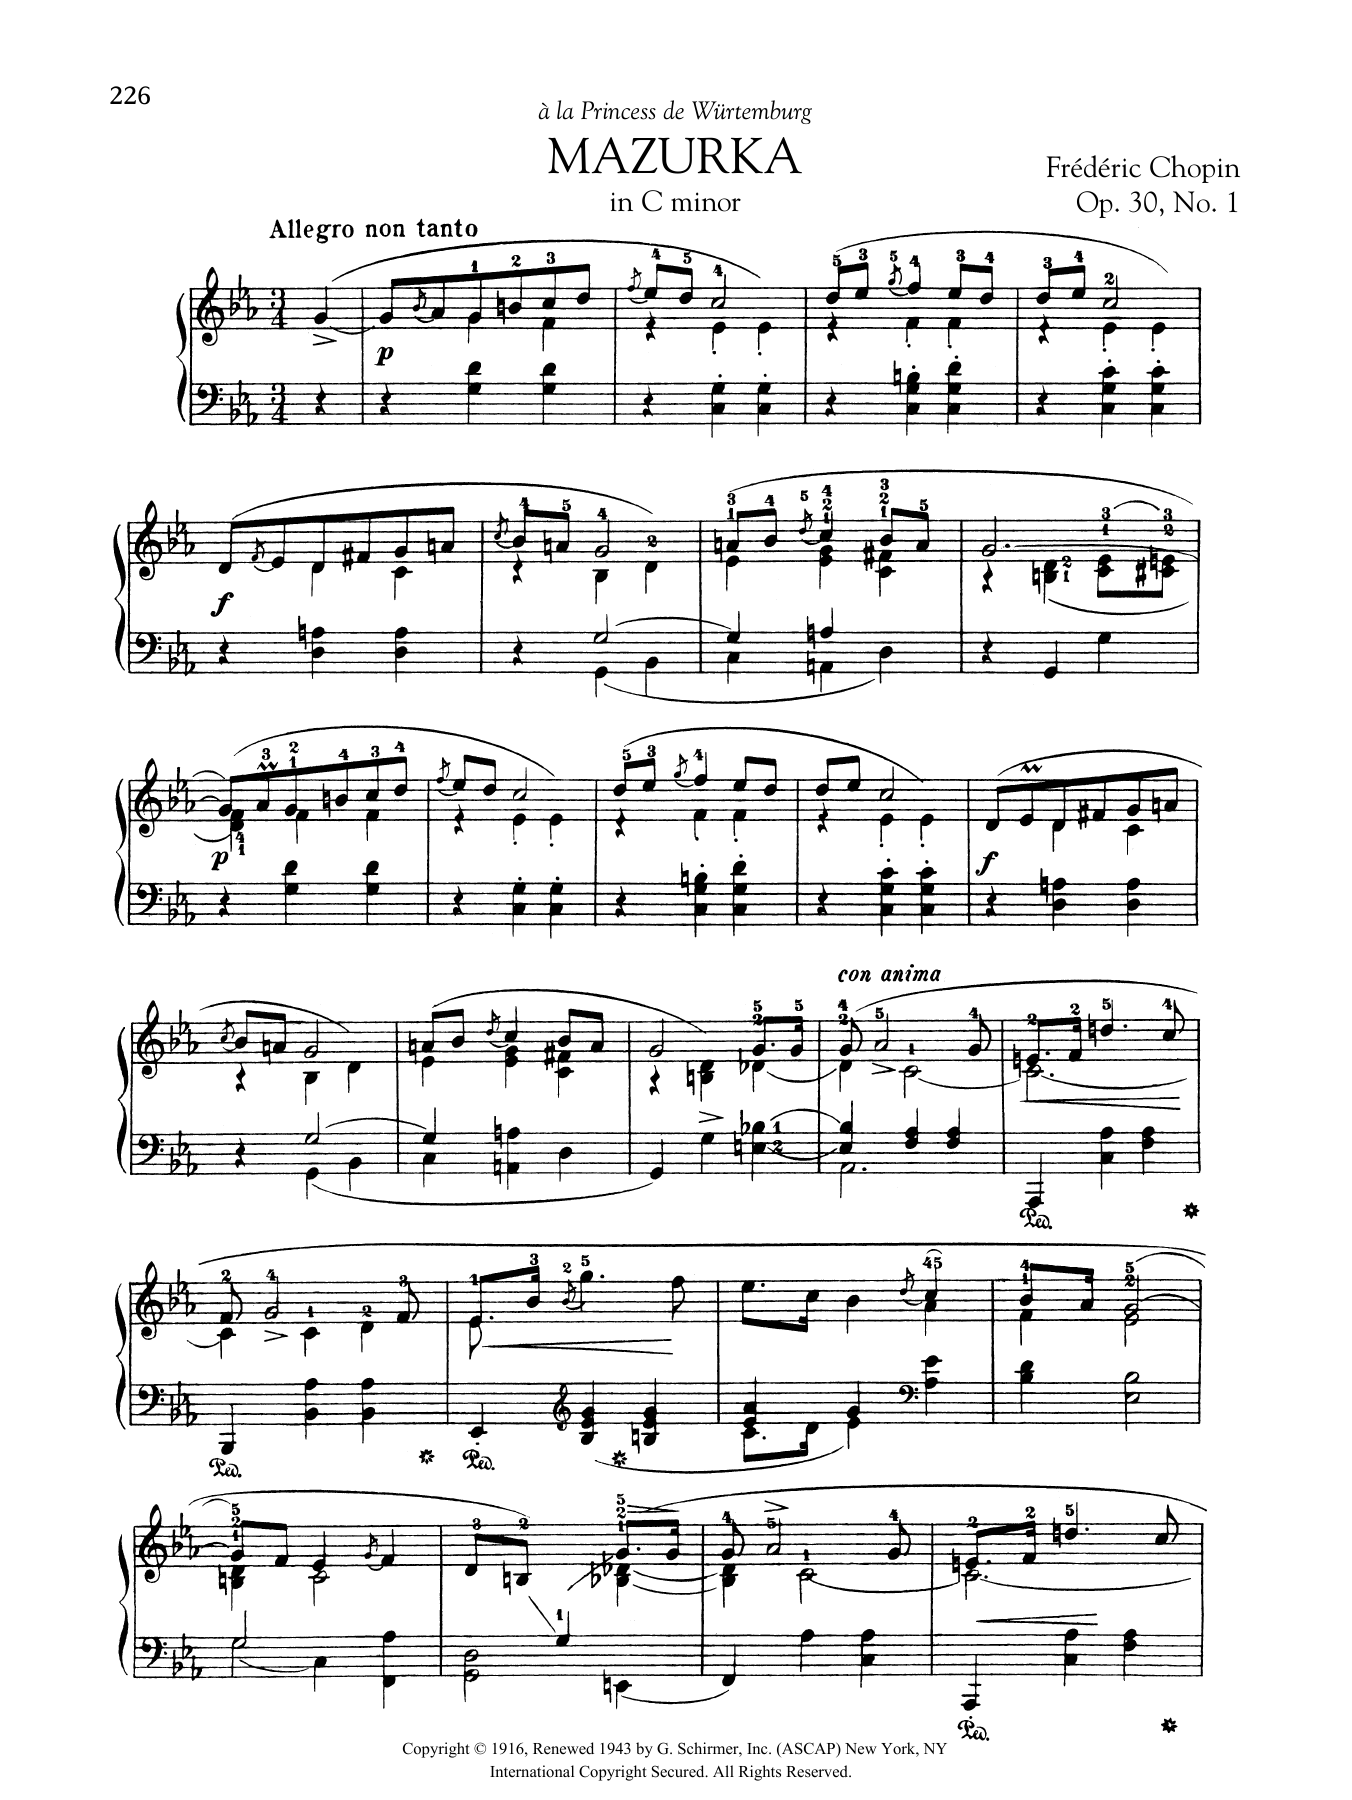 Download Frederic Chopin Mazurka in C minor, Op. 30, No. 1 Sheet Music